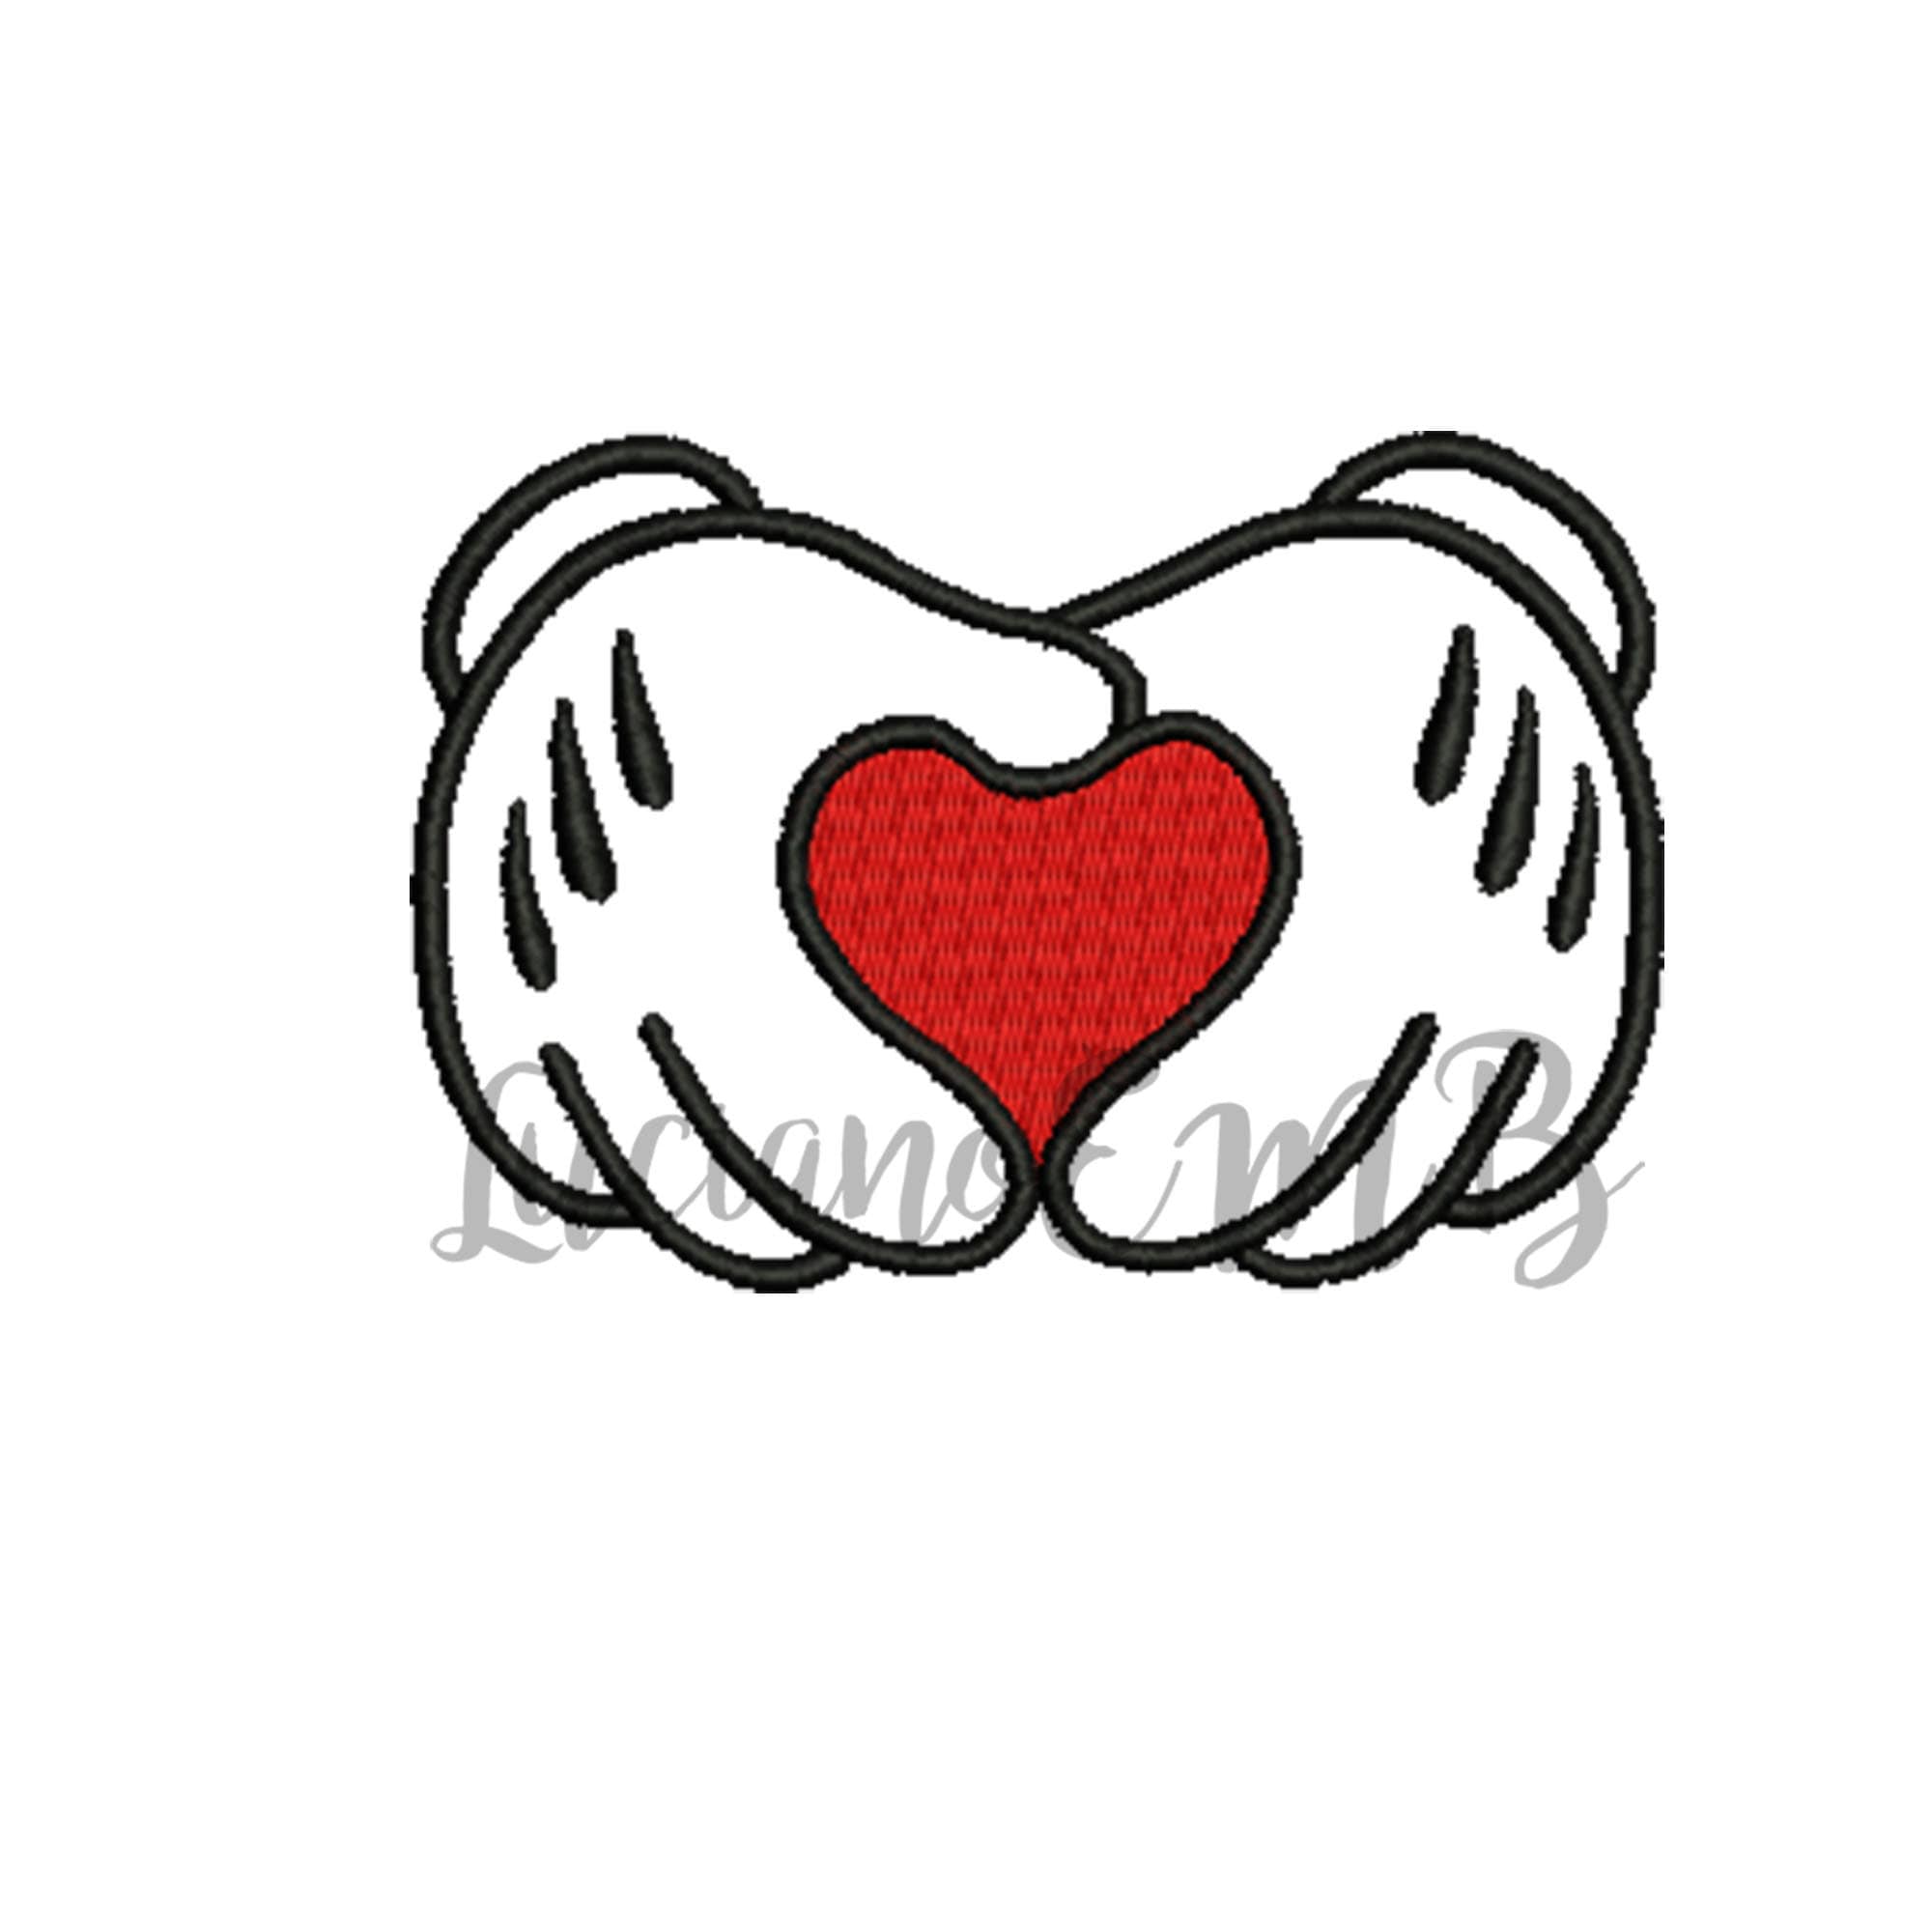 Mickey hands heart - .de